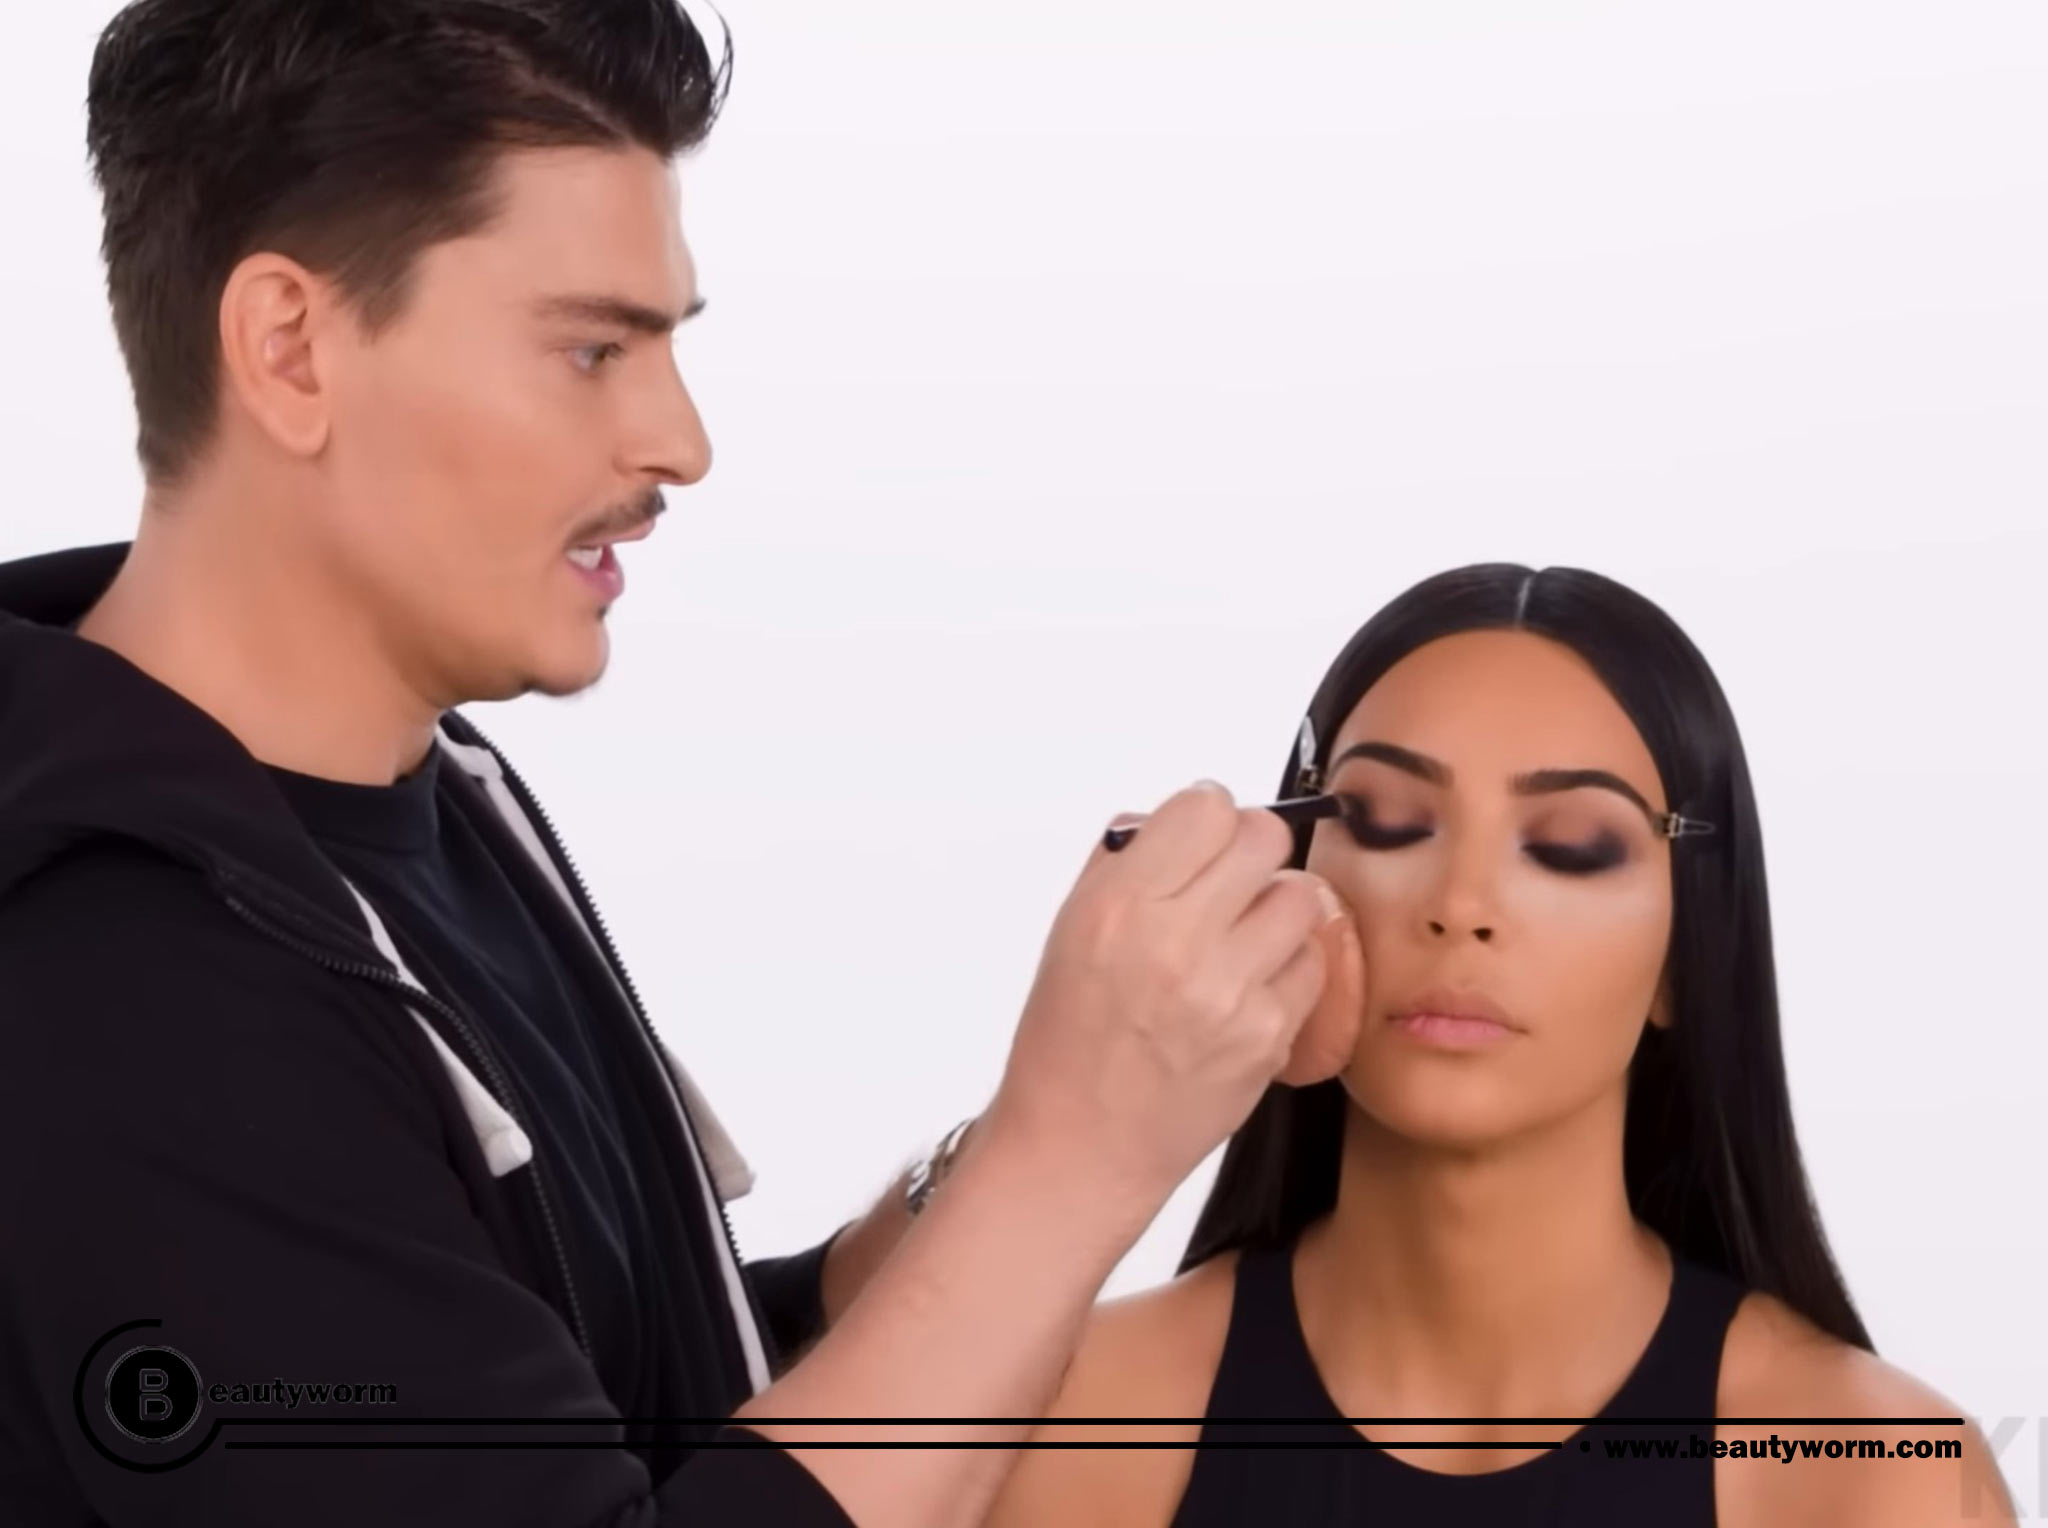 What makeup foundation does Kim Kardashian use?